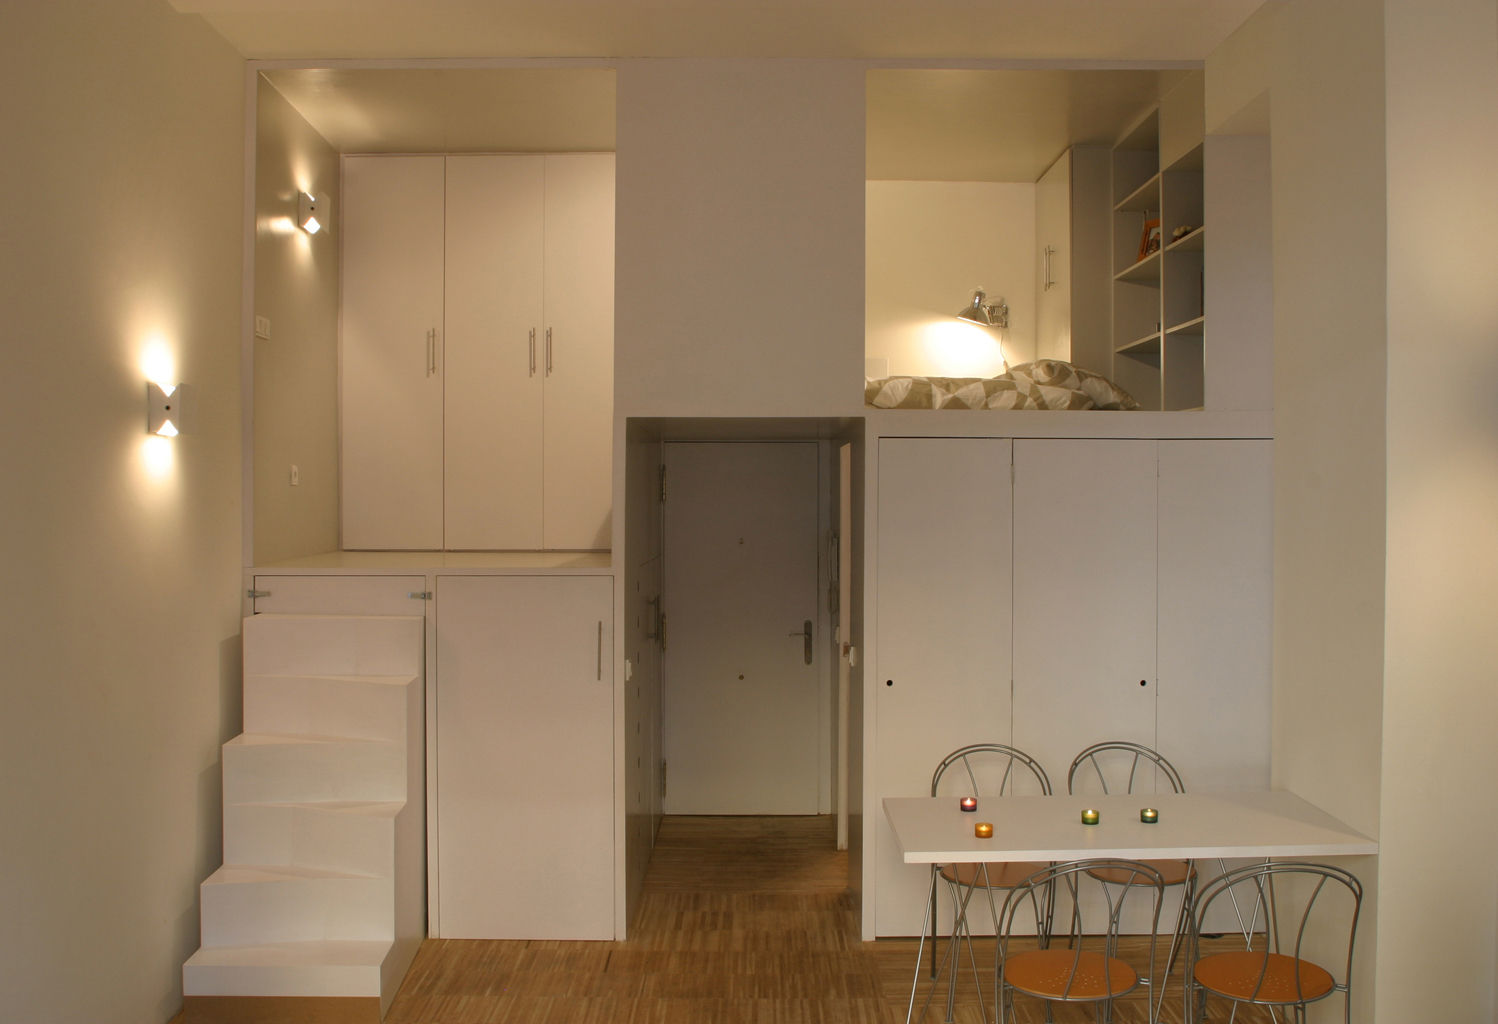 Loft DUQUE DE ALBA. Madrid Beriot, Bernardini arquitectos Comedores de estilo minimalista